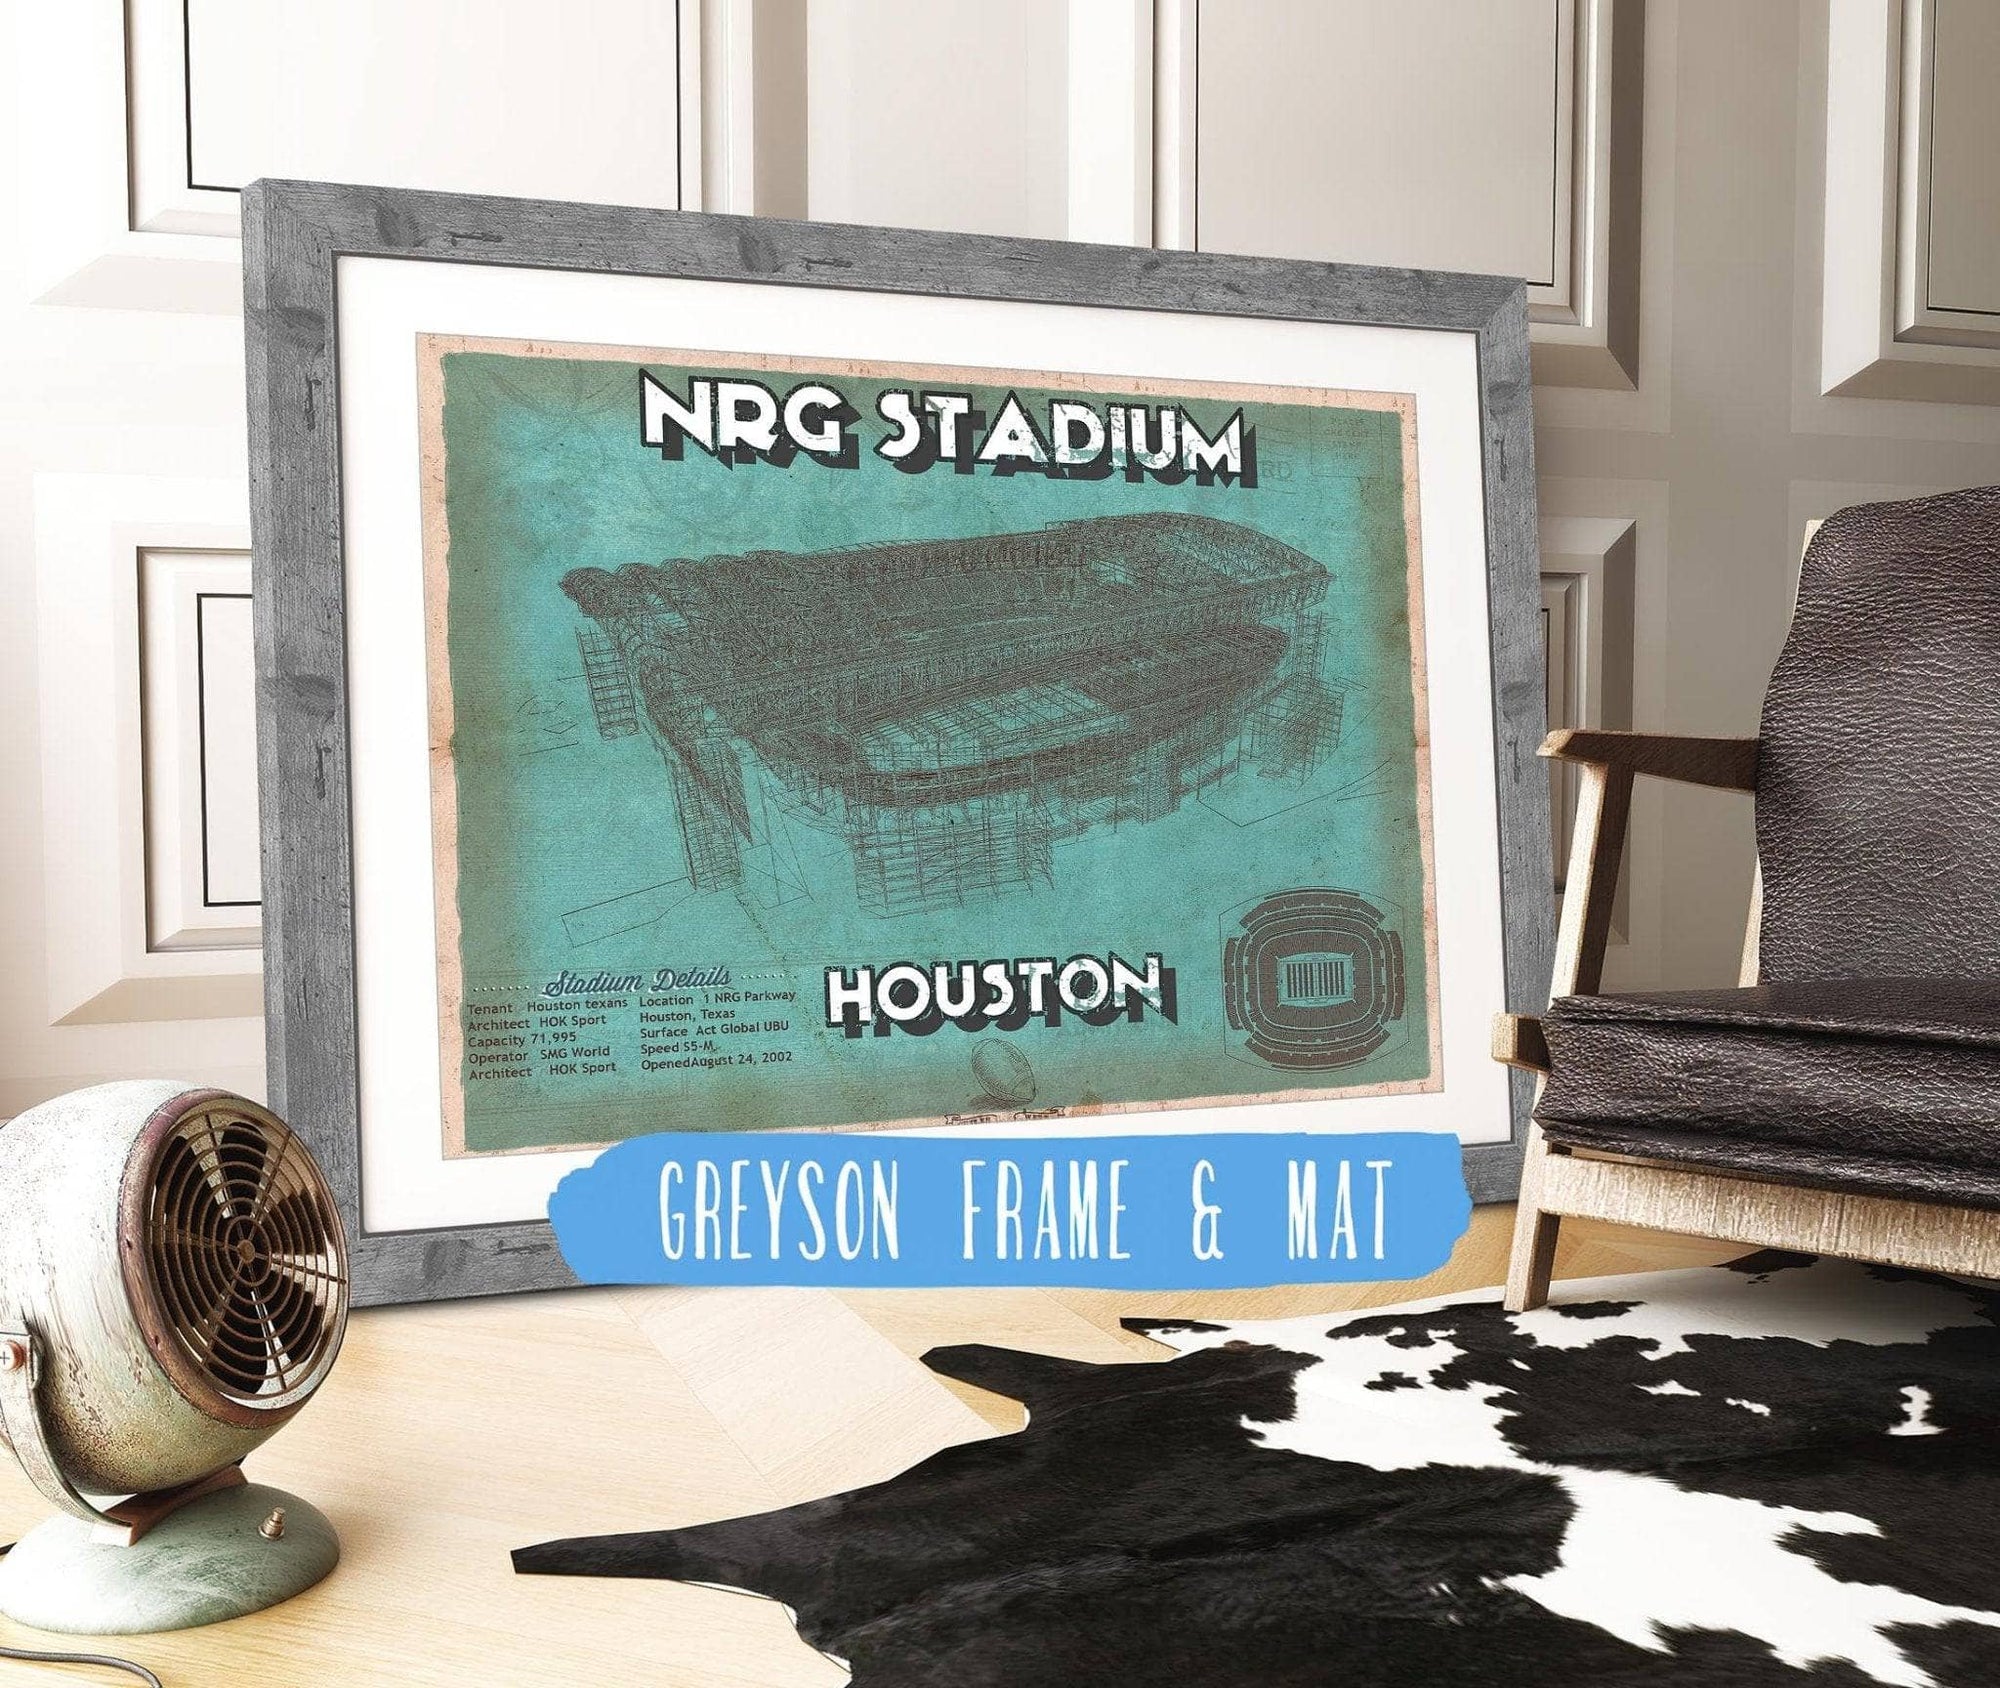 Cutler West Pro Football Collection 14" x 11" / Greyson Frame & Mat Houston Texans NRG Stadium Vintage Football Print 698624124_70633